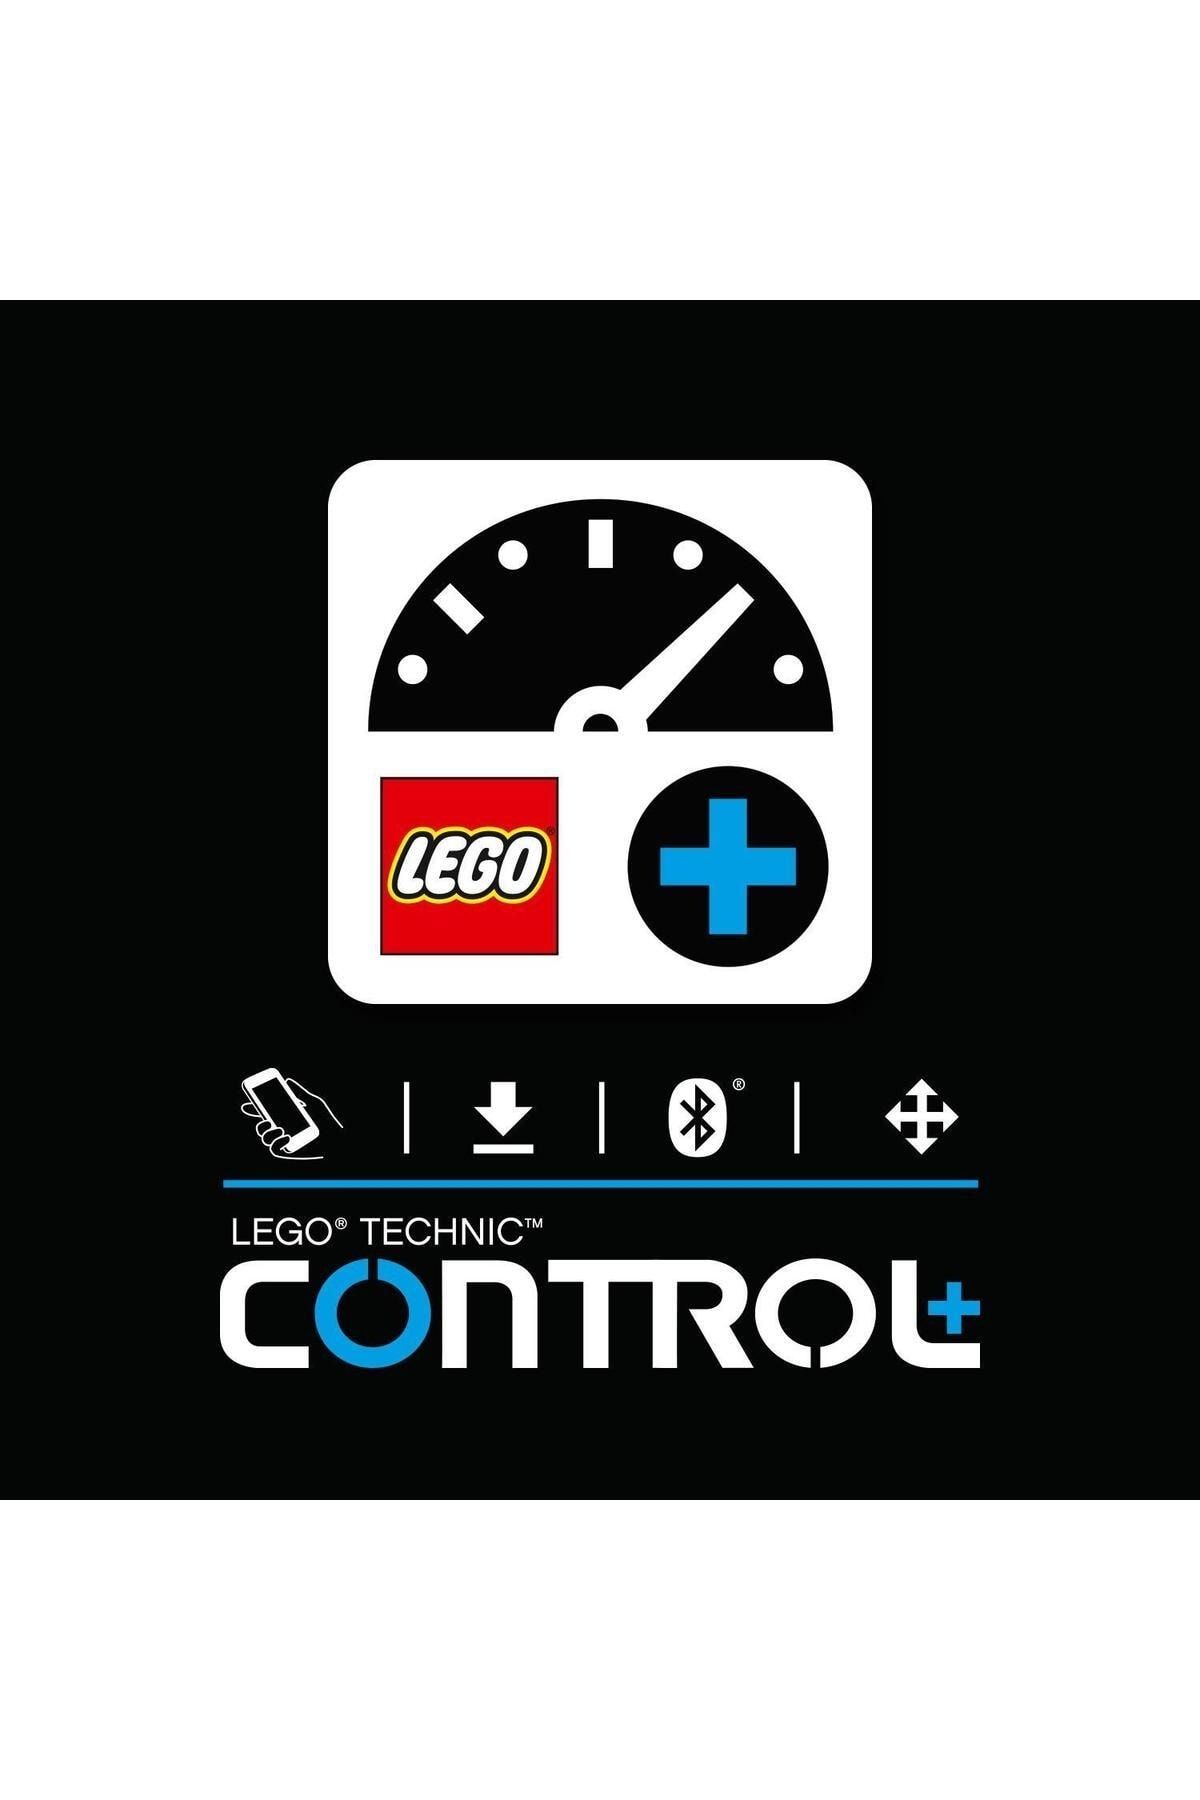 LEGO لگو ست ساخت و ساز 6x6 کامیون ولوو مفصلی (42114) (2193 قطعه)